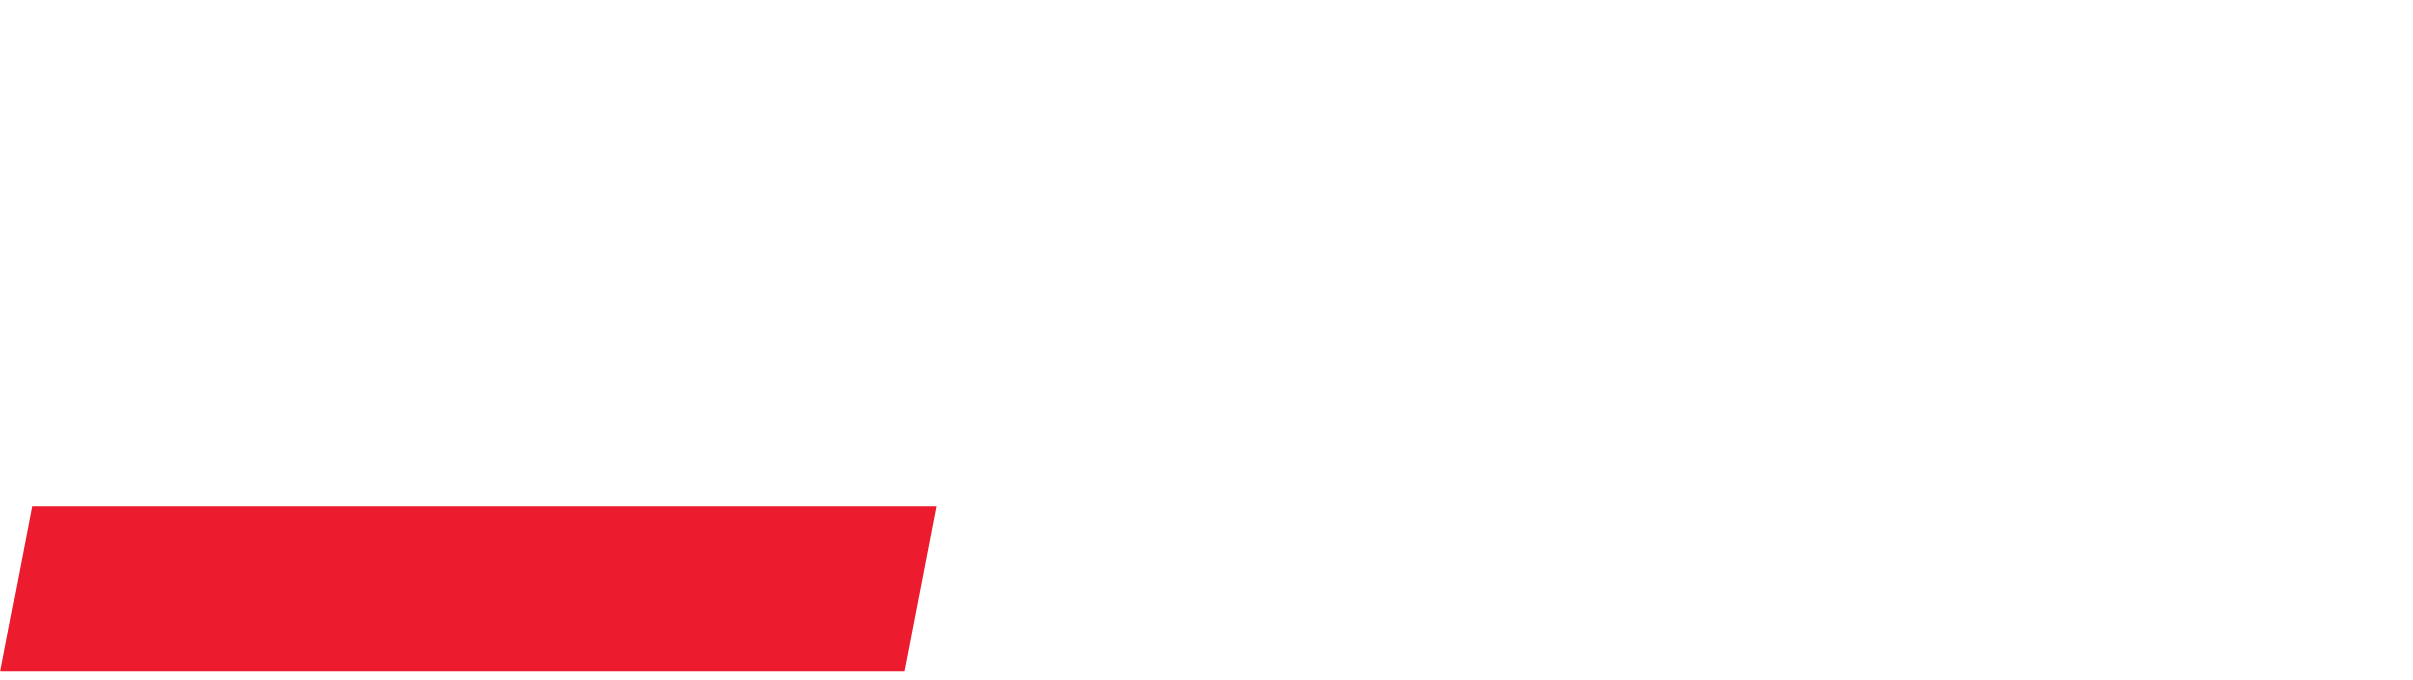 Tracker Off Road Logo